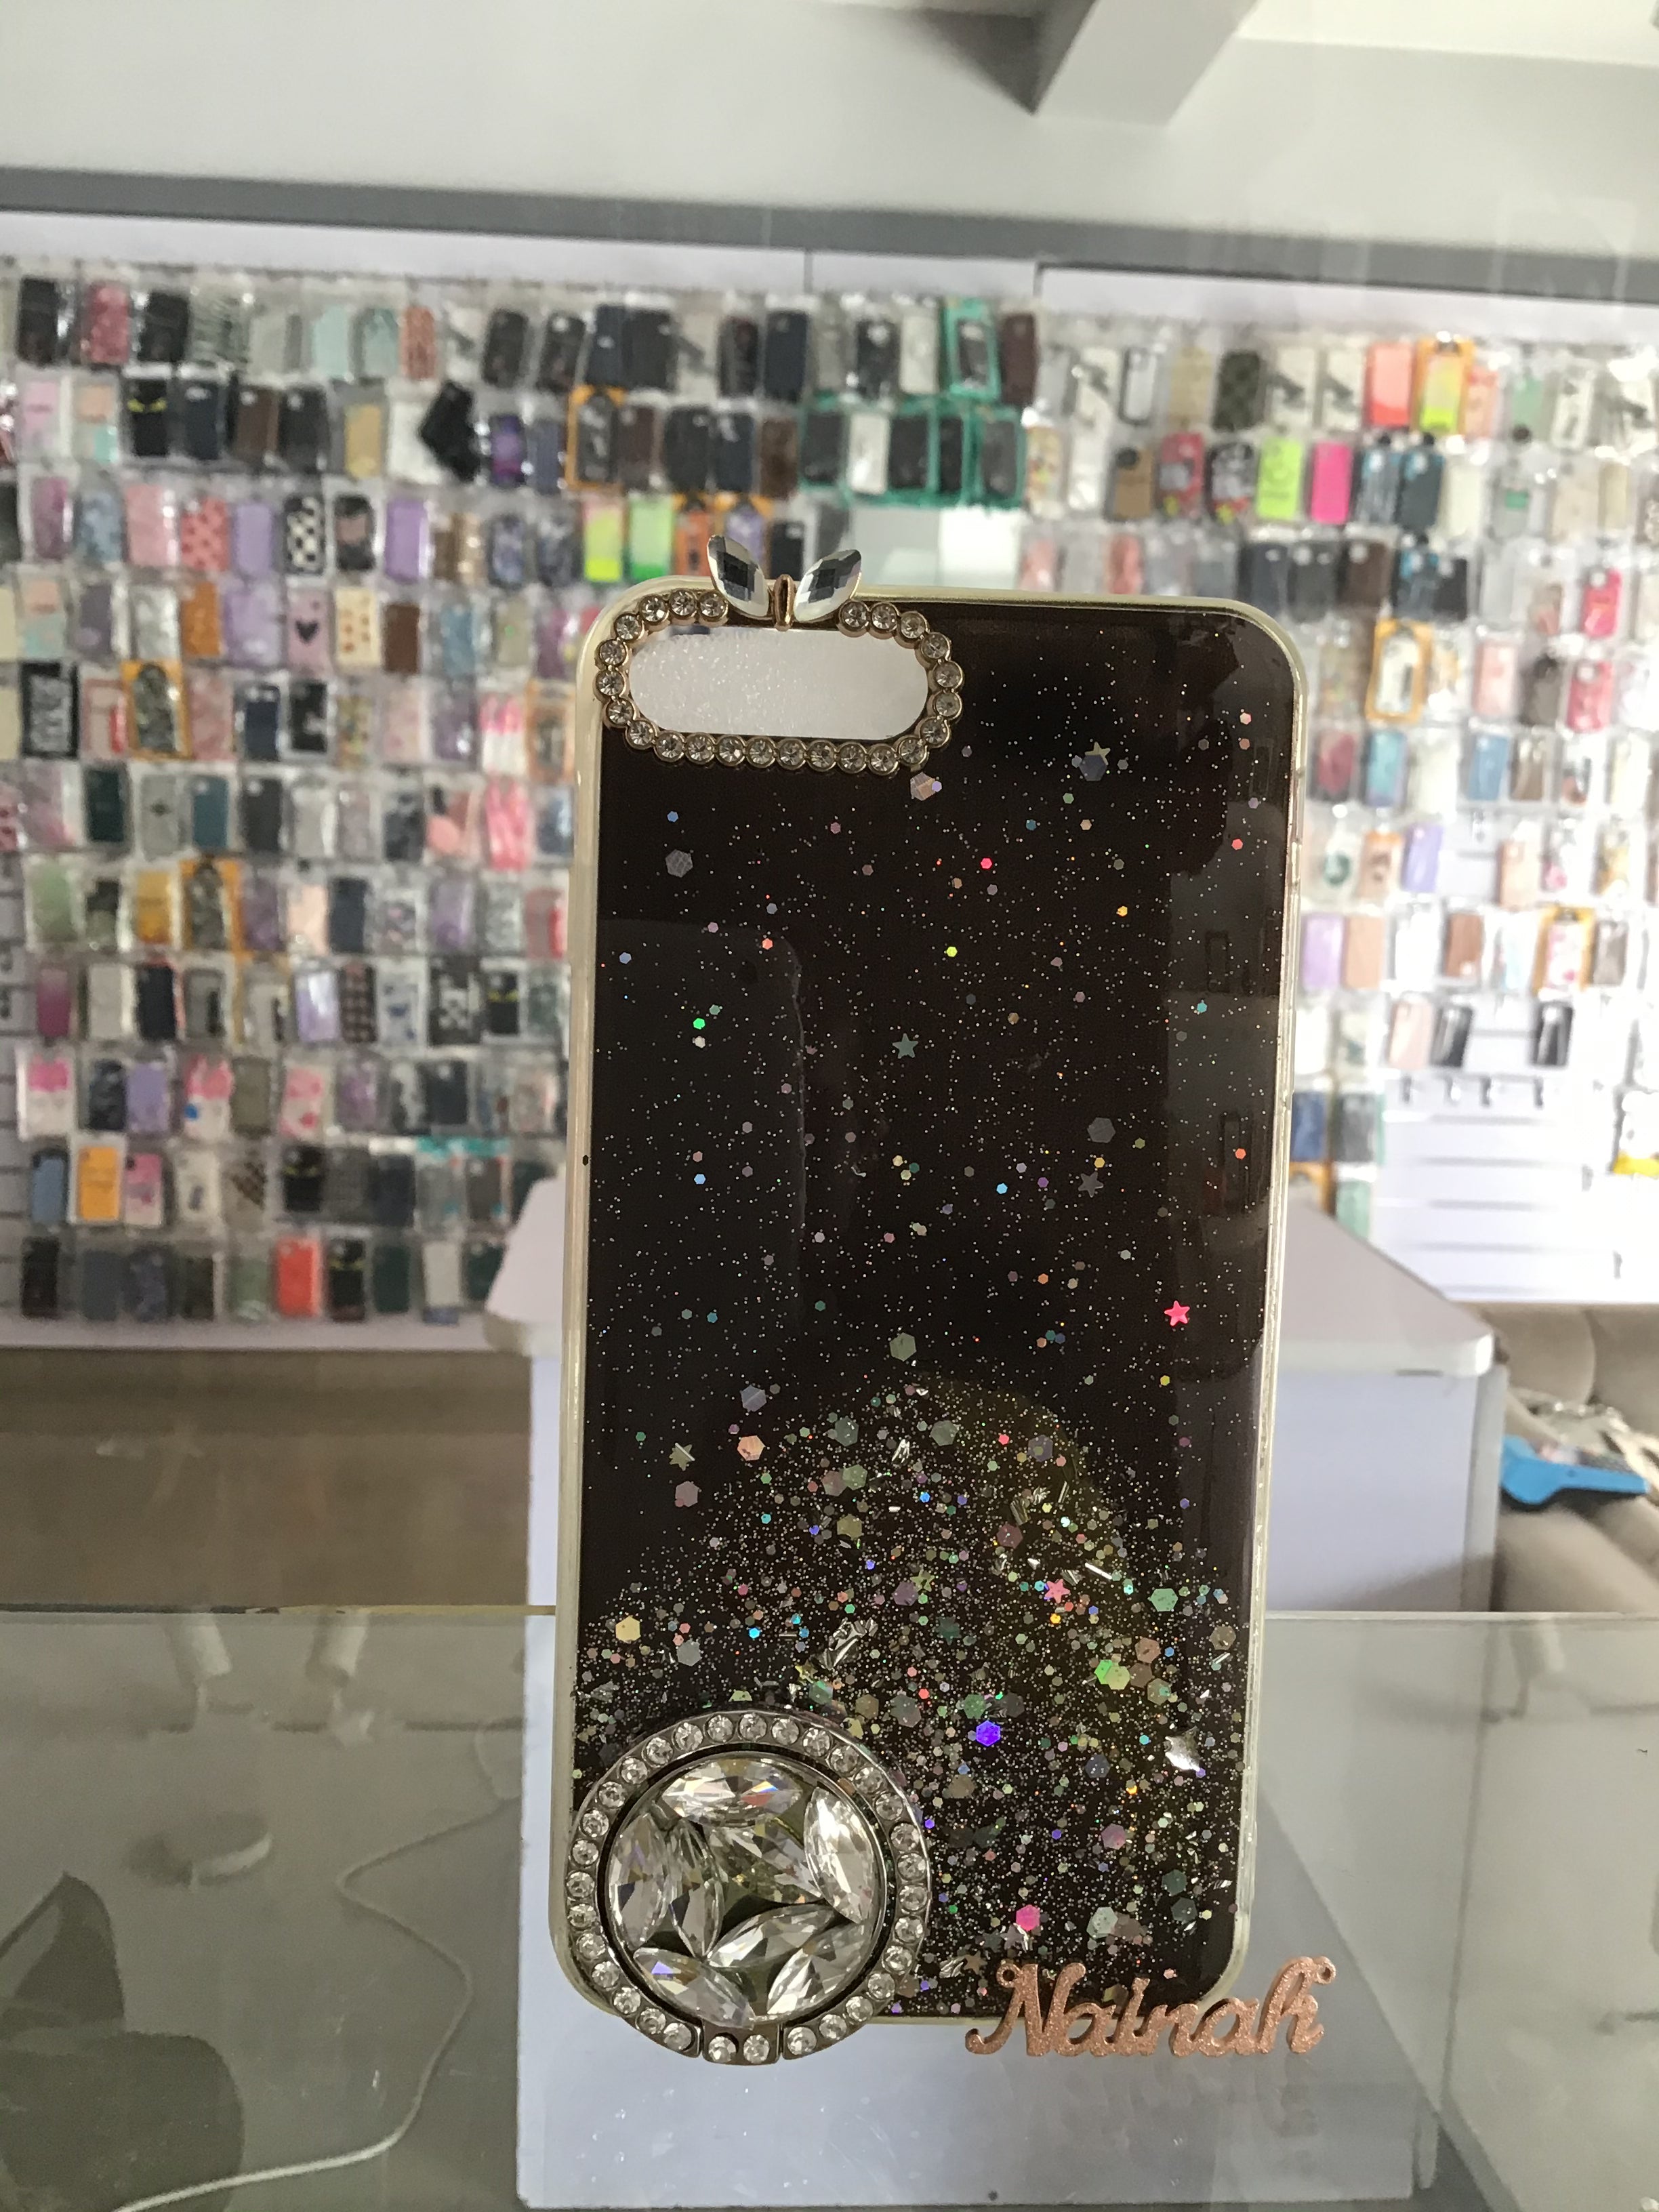 Black Glitter With Rhinestones Grip Grip Case For iPhone 7/8 plus